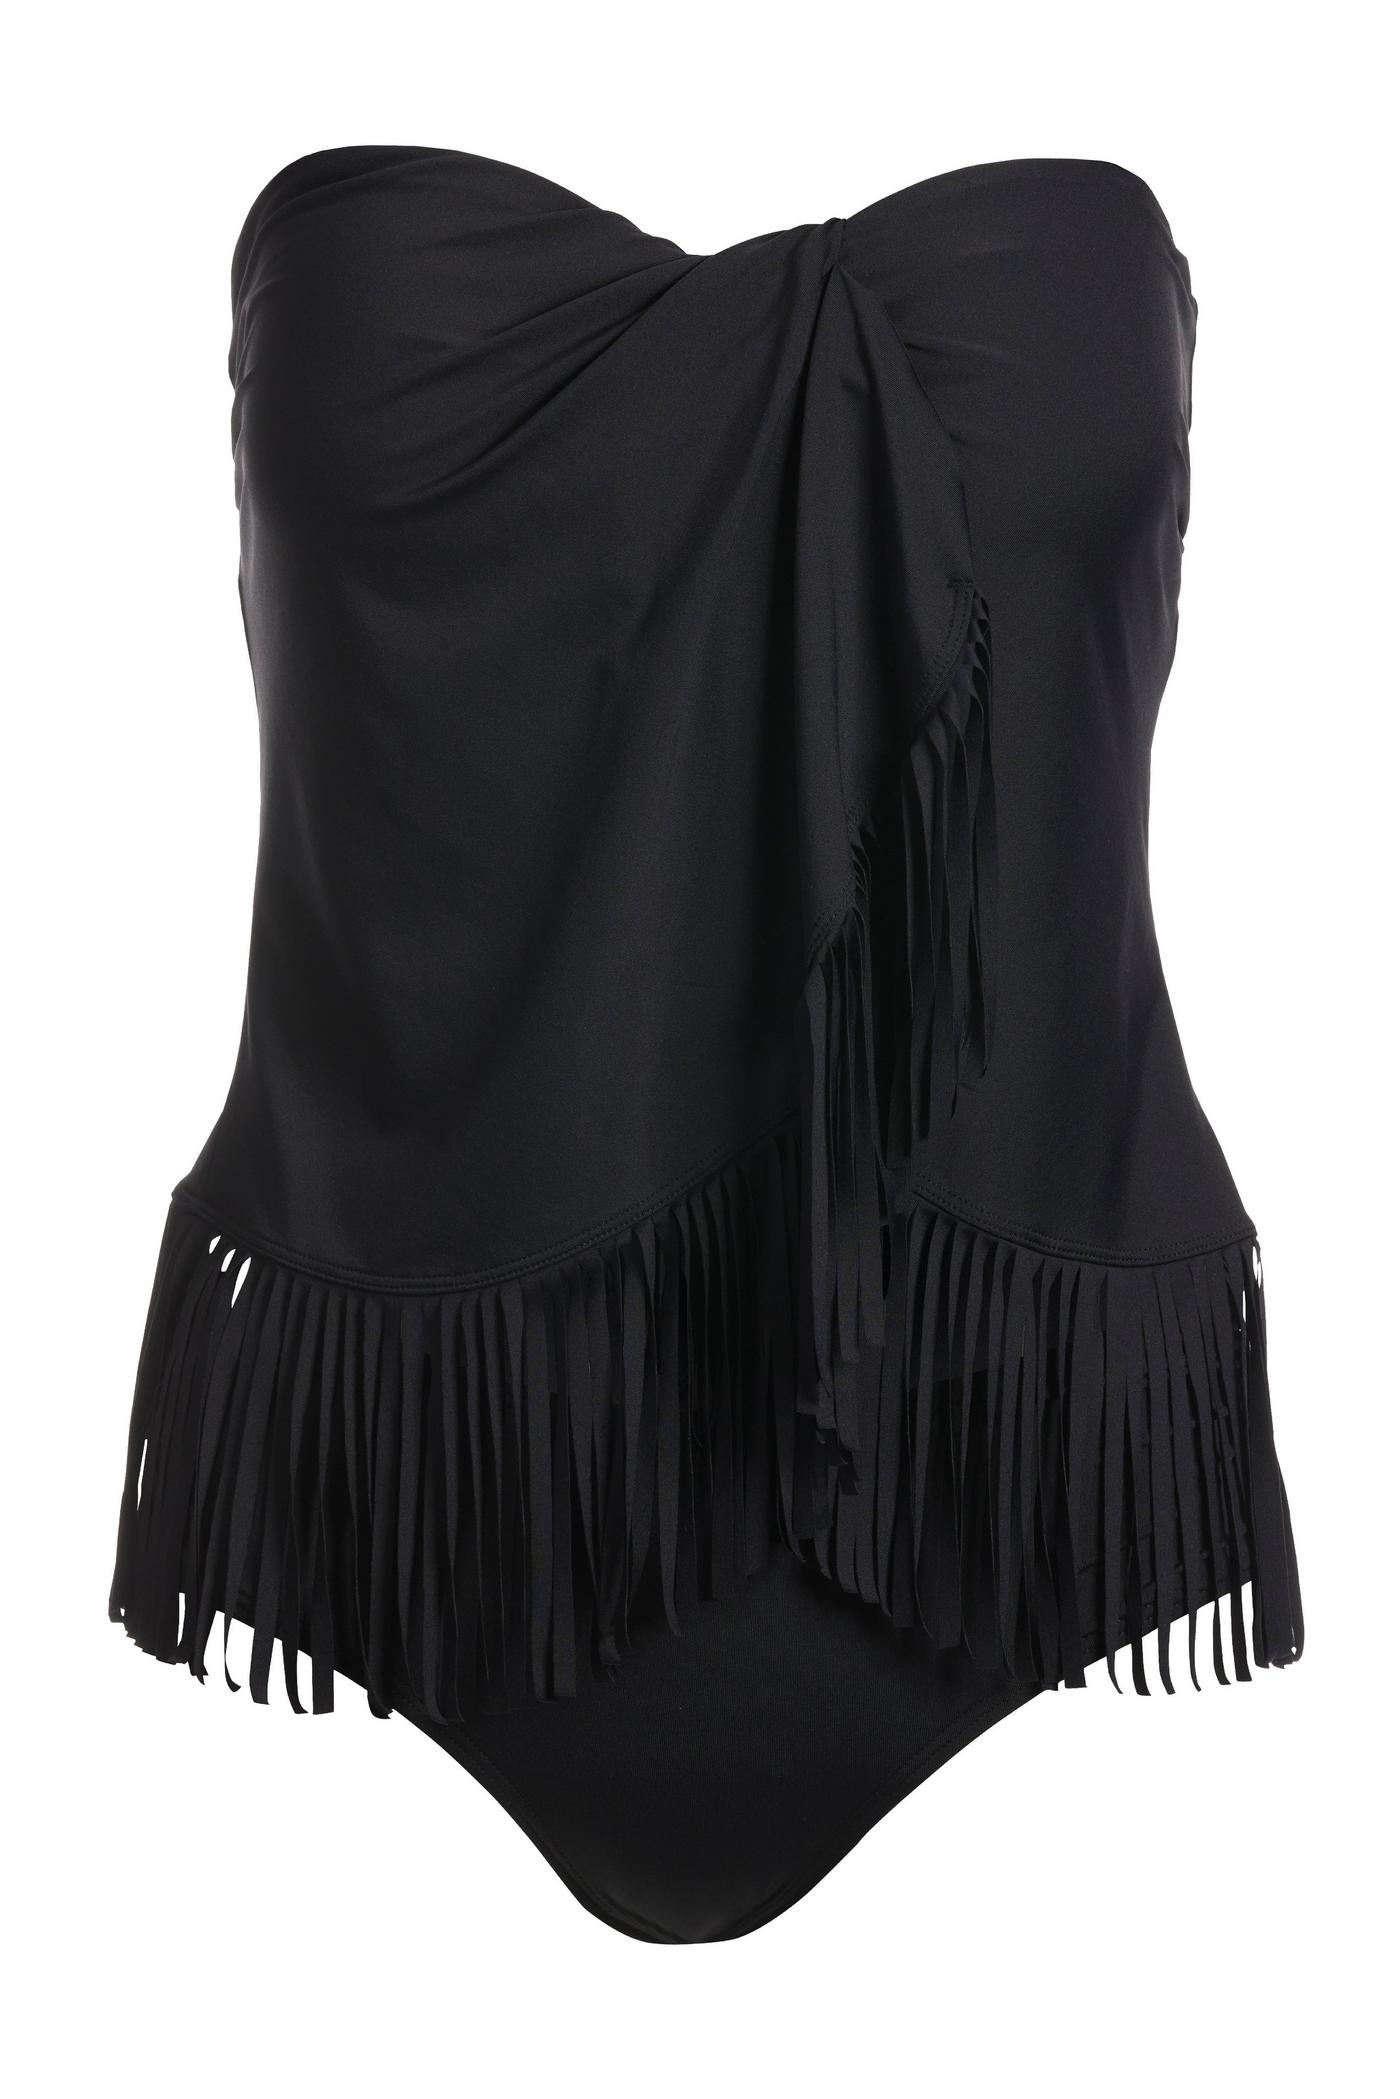 Black Lace Trim Tankini Top by BODYFLIRT | Swimwear365